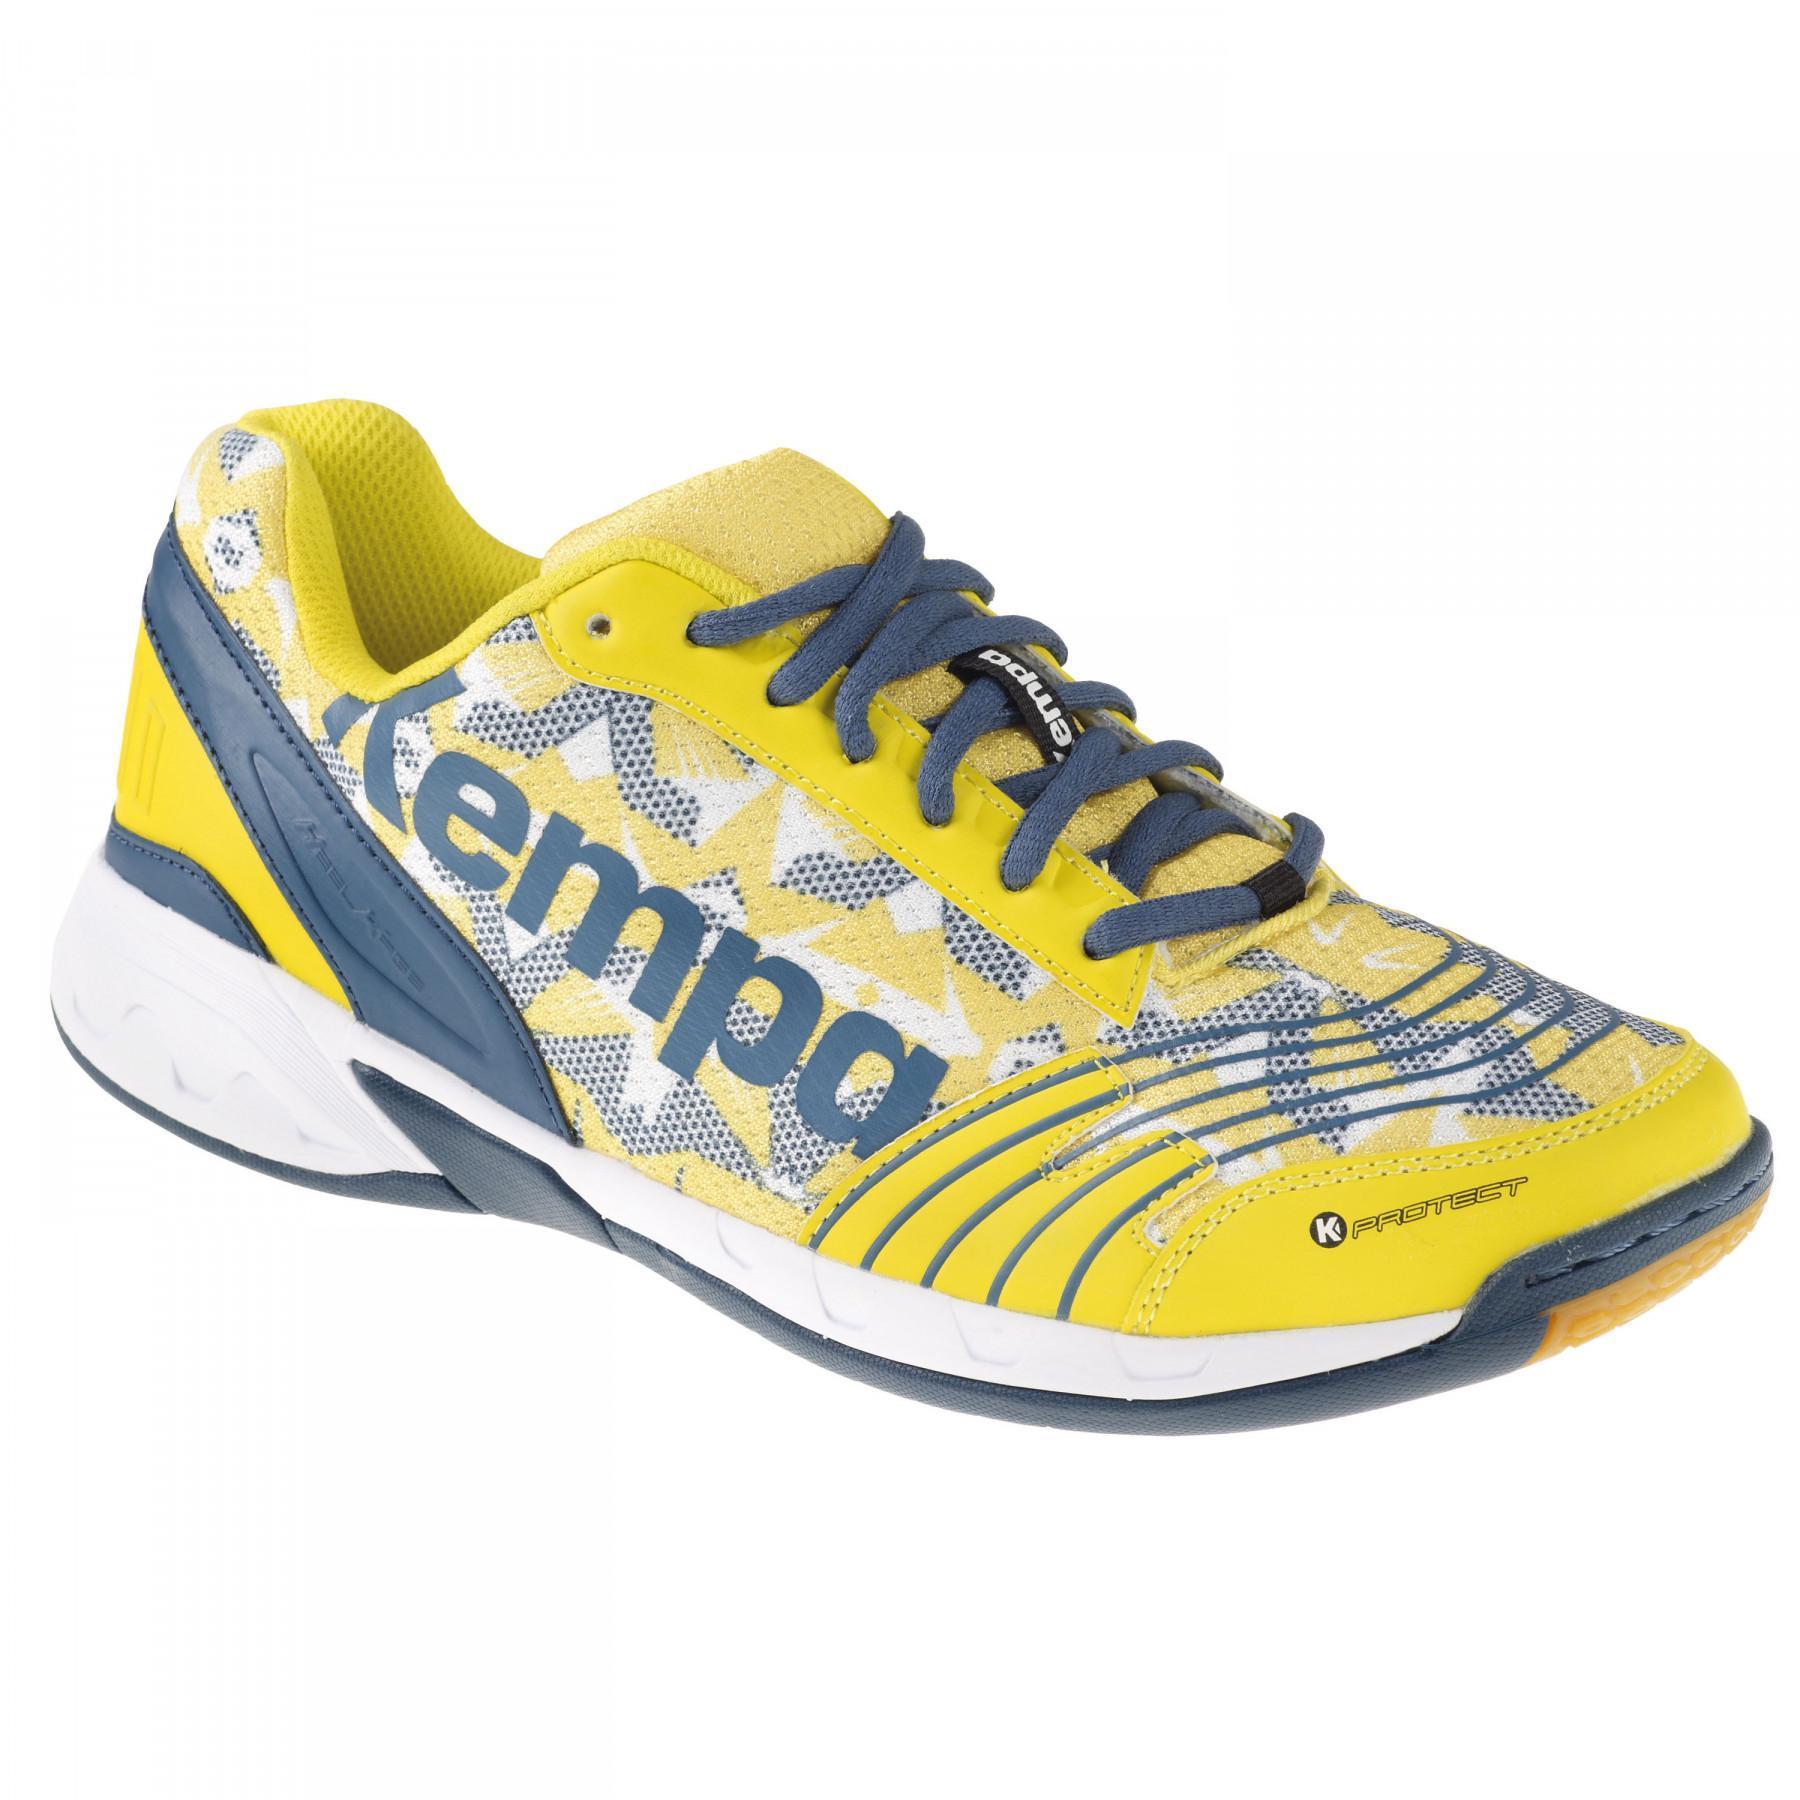 Sapatos Kempa Attack Three bleu roi/blanc/jaune